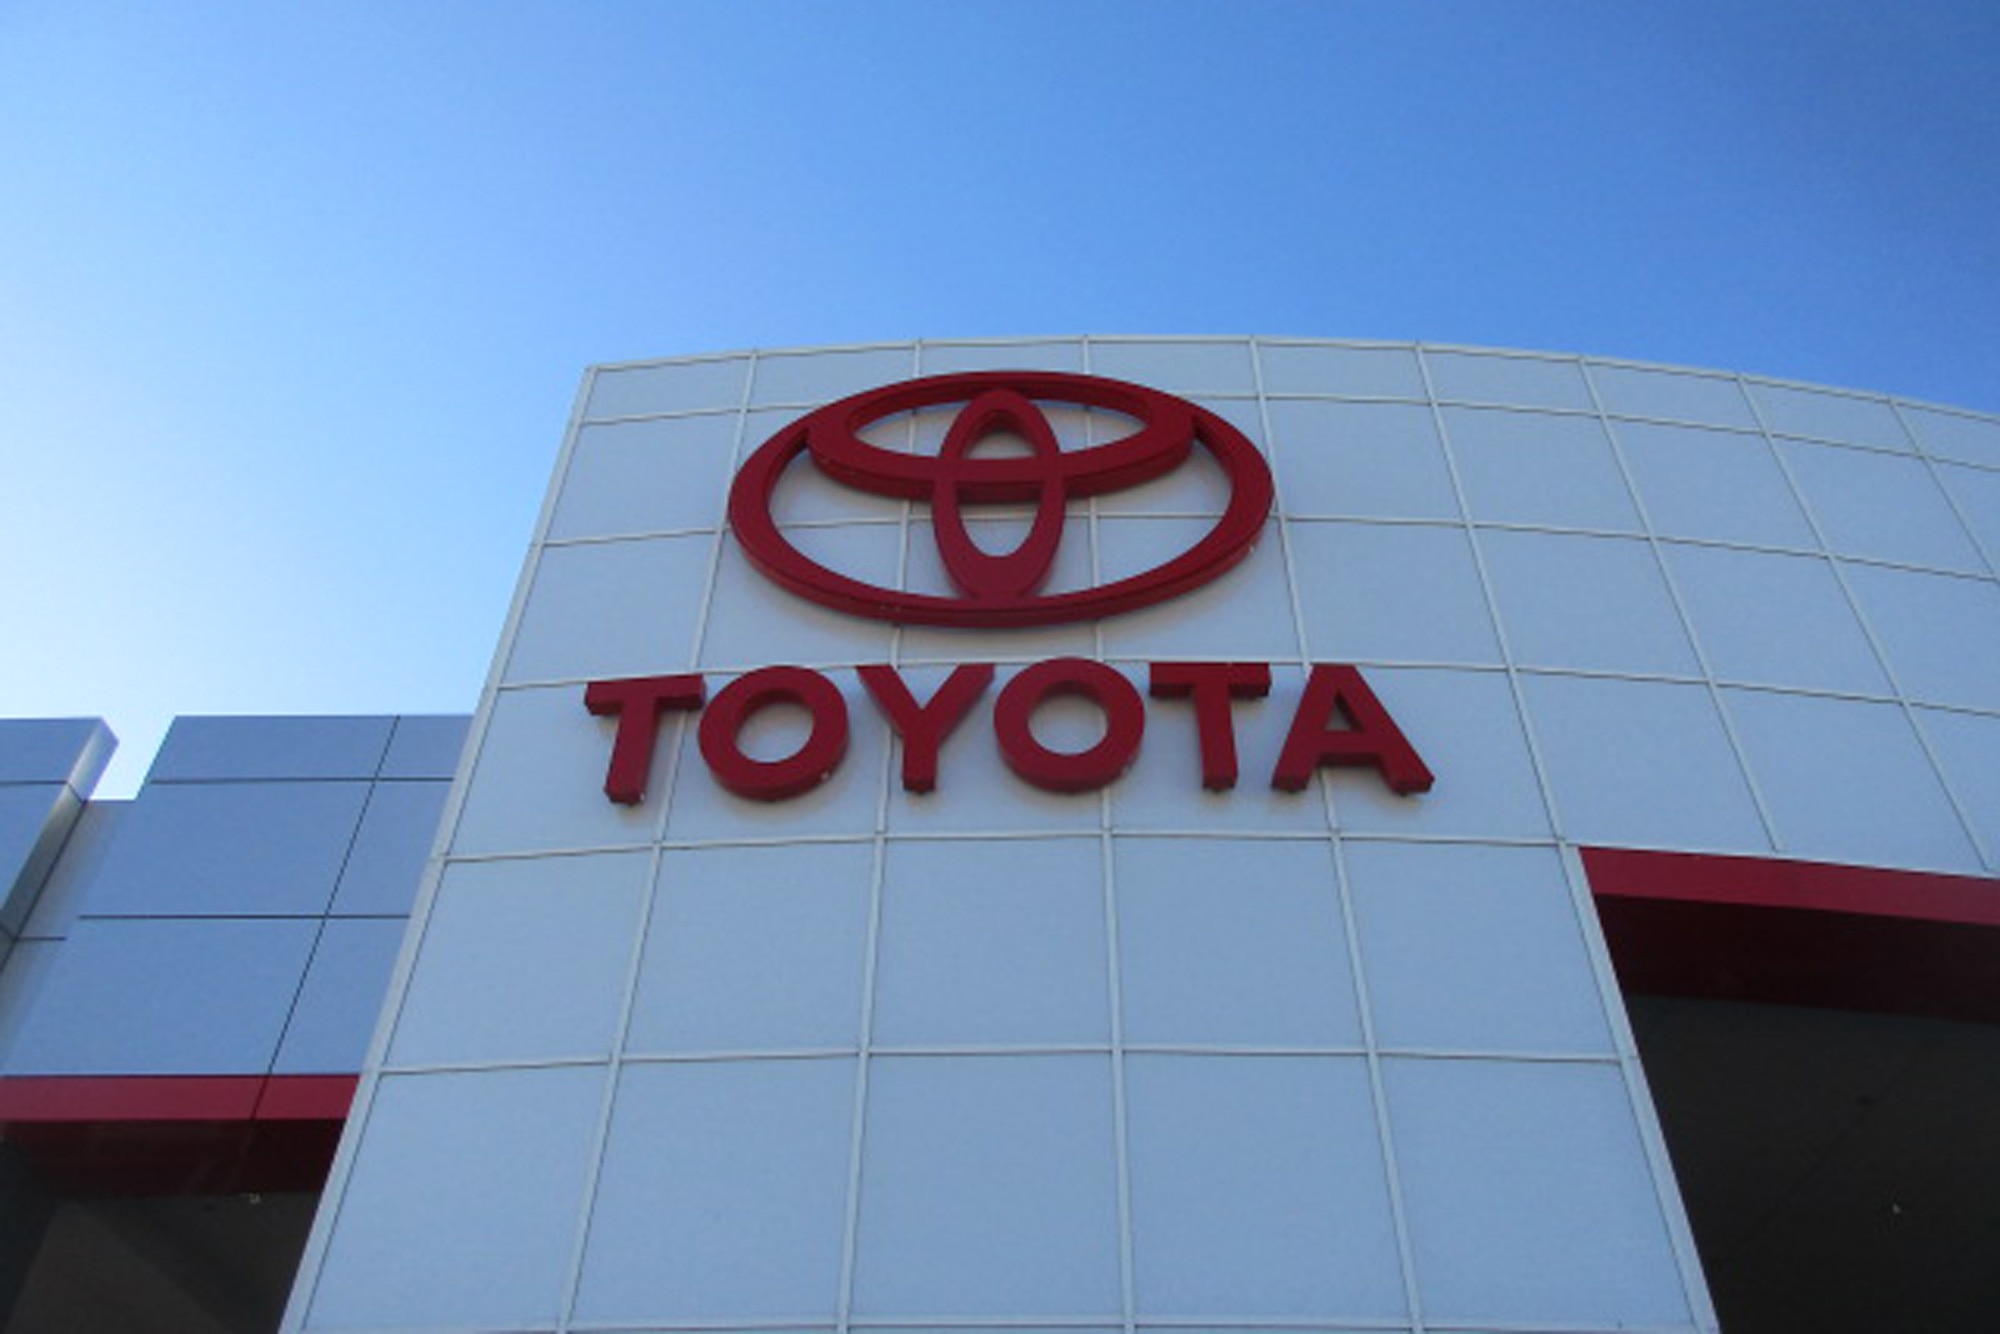 Toyota dealership sign